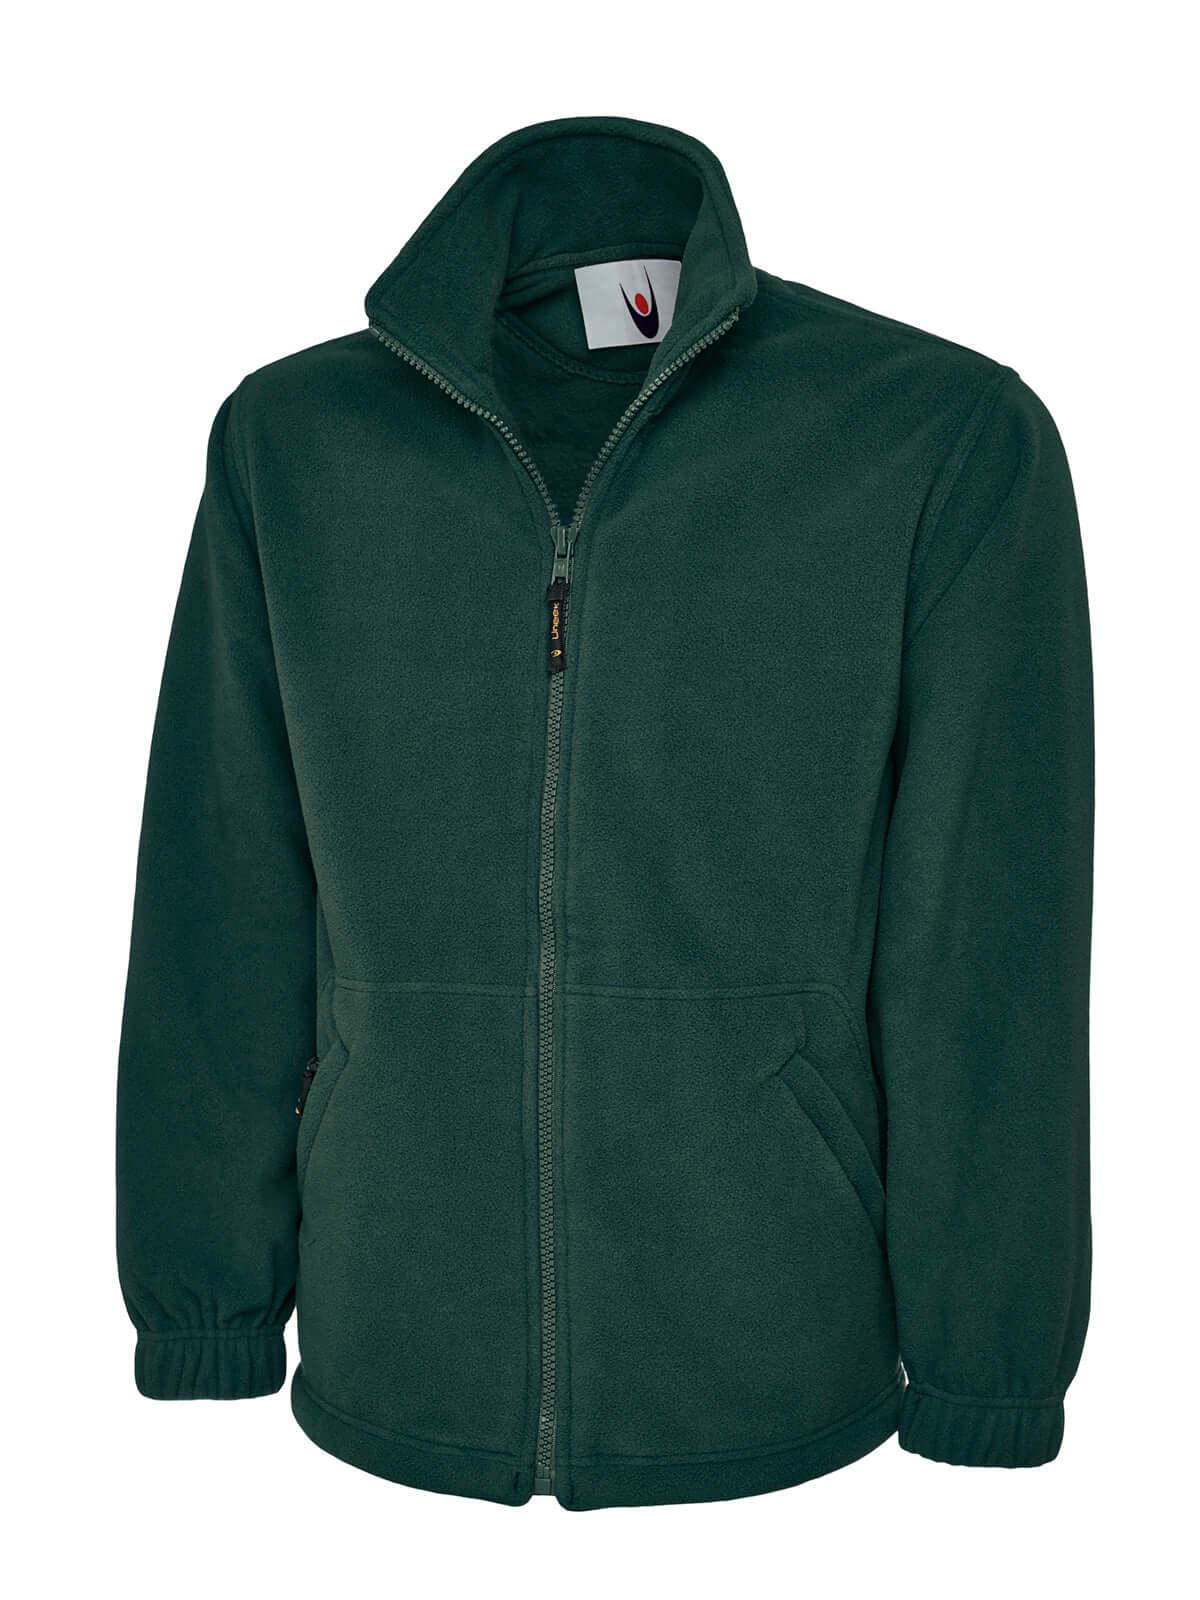 Pegasus Uniform Premium Full Zip Micro Fleece Jacket - Green Bottle